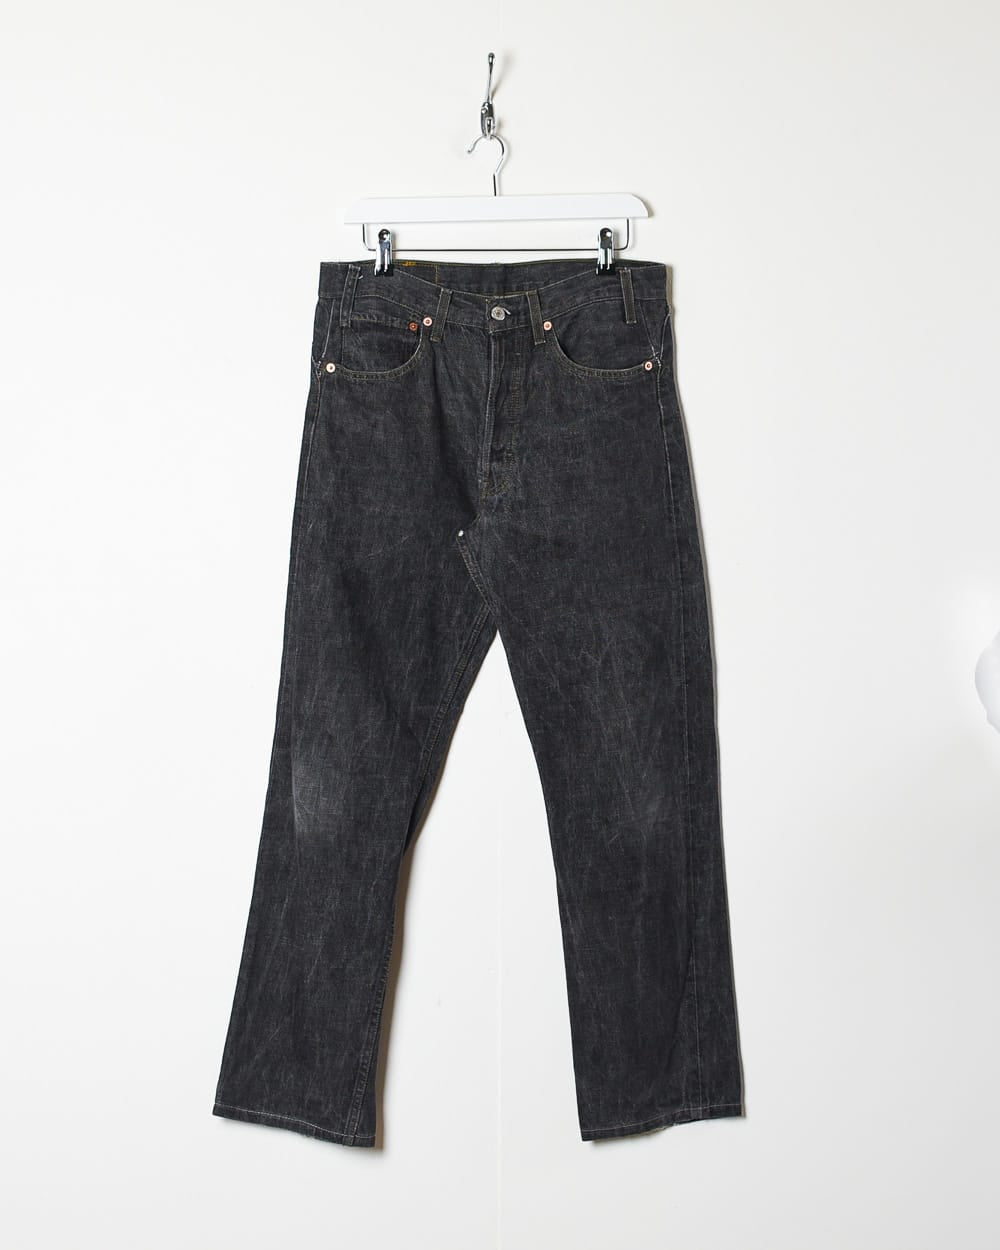 Black Levi's 501 Jeans - W31 L30